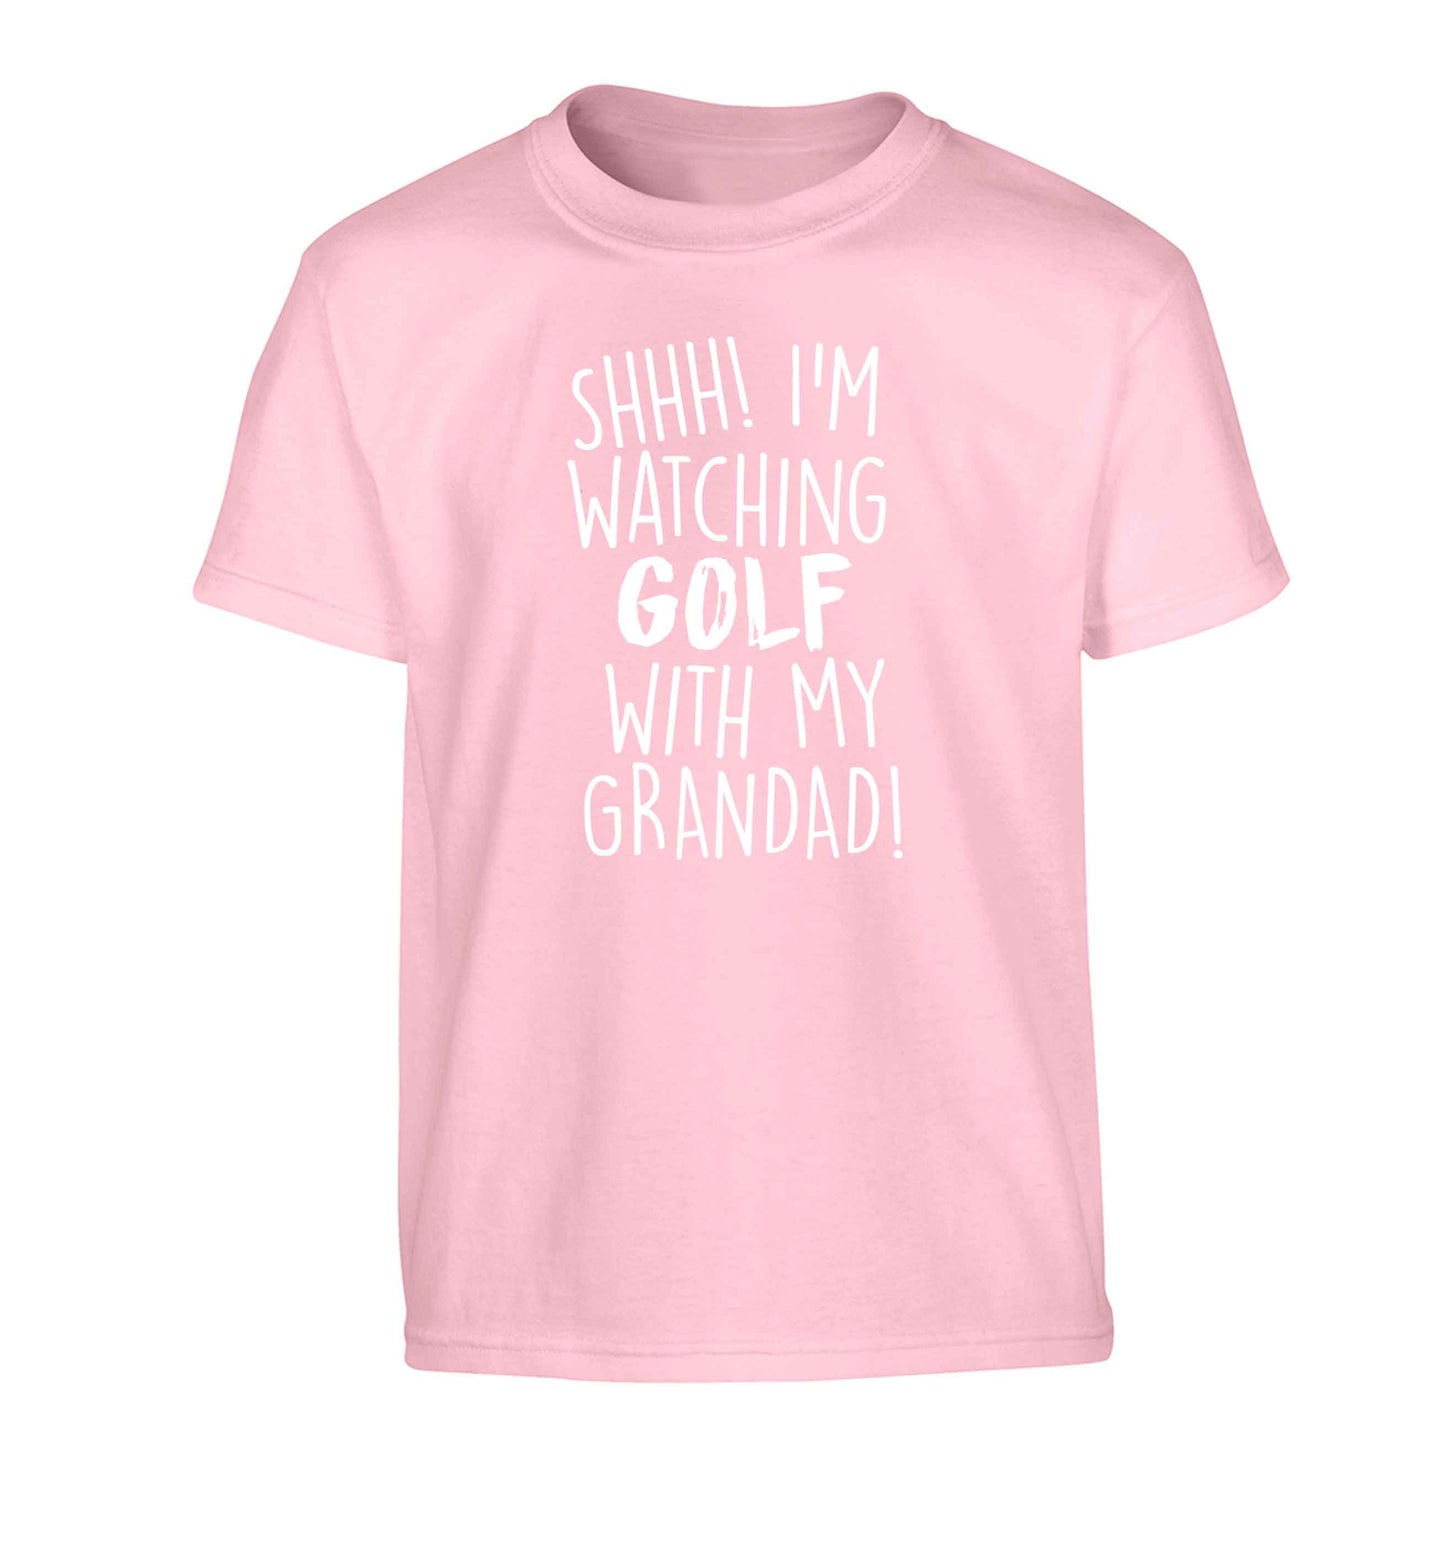 Shh I'm watching golf with my grandad Children's light pink Tshirt 12-13 Years